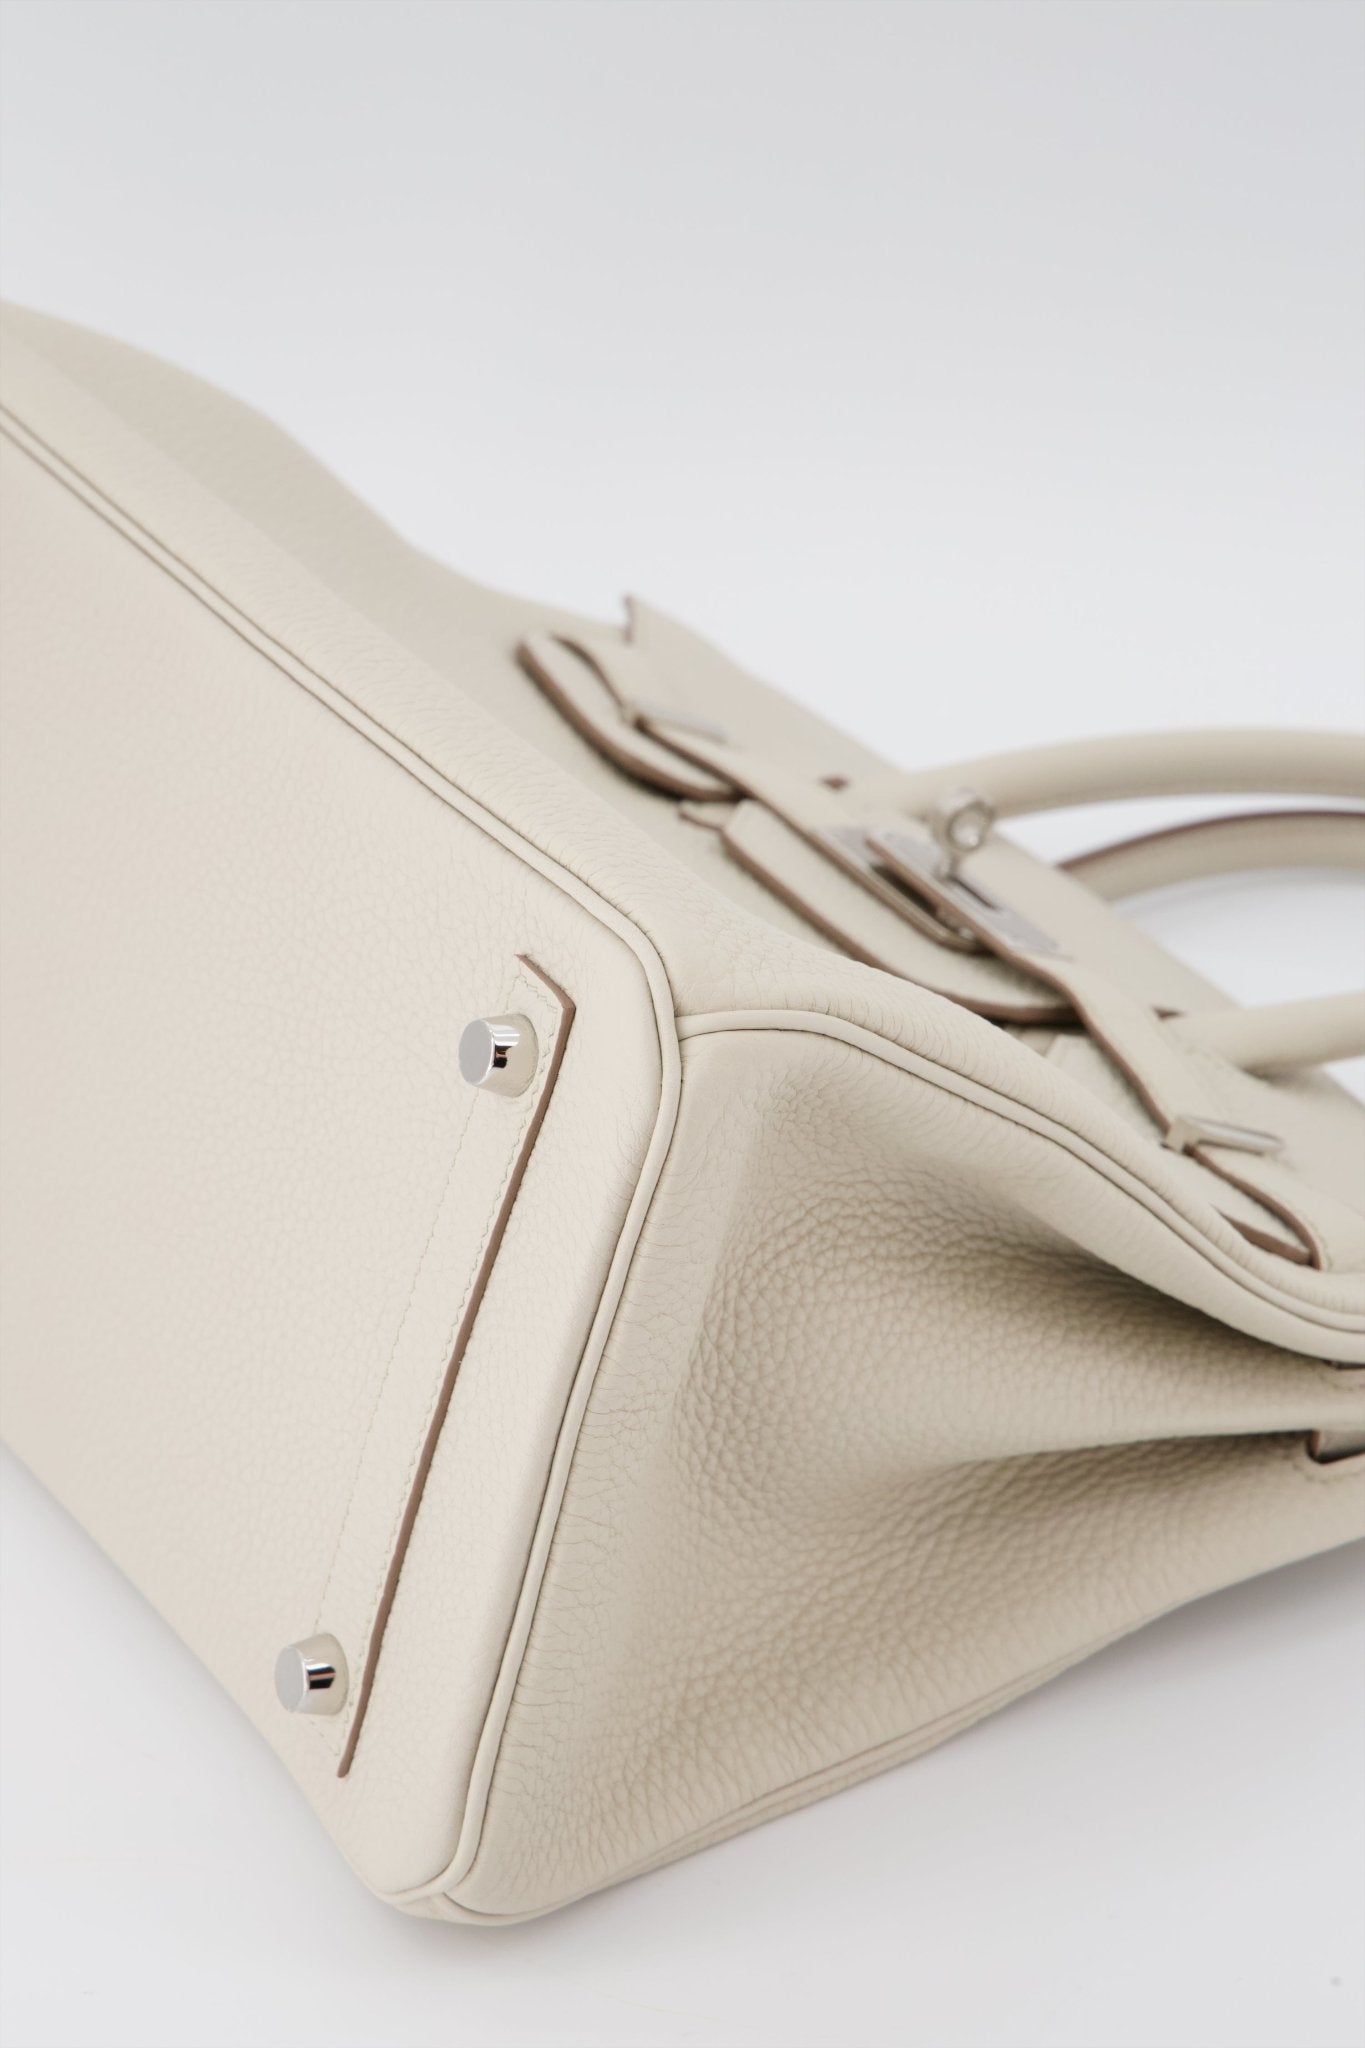 Hermes Birkin Mini Bag Togo Leather Palladium Hardware In Teal